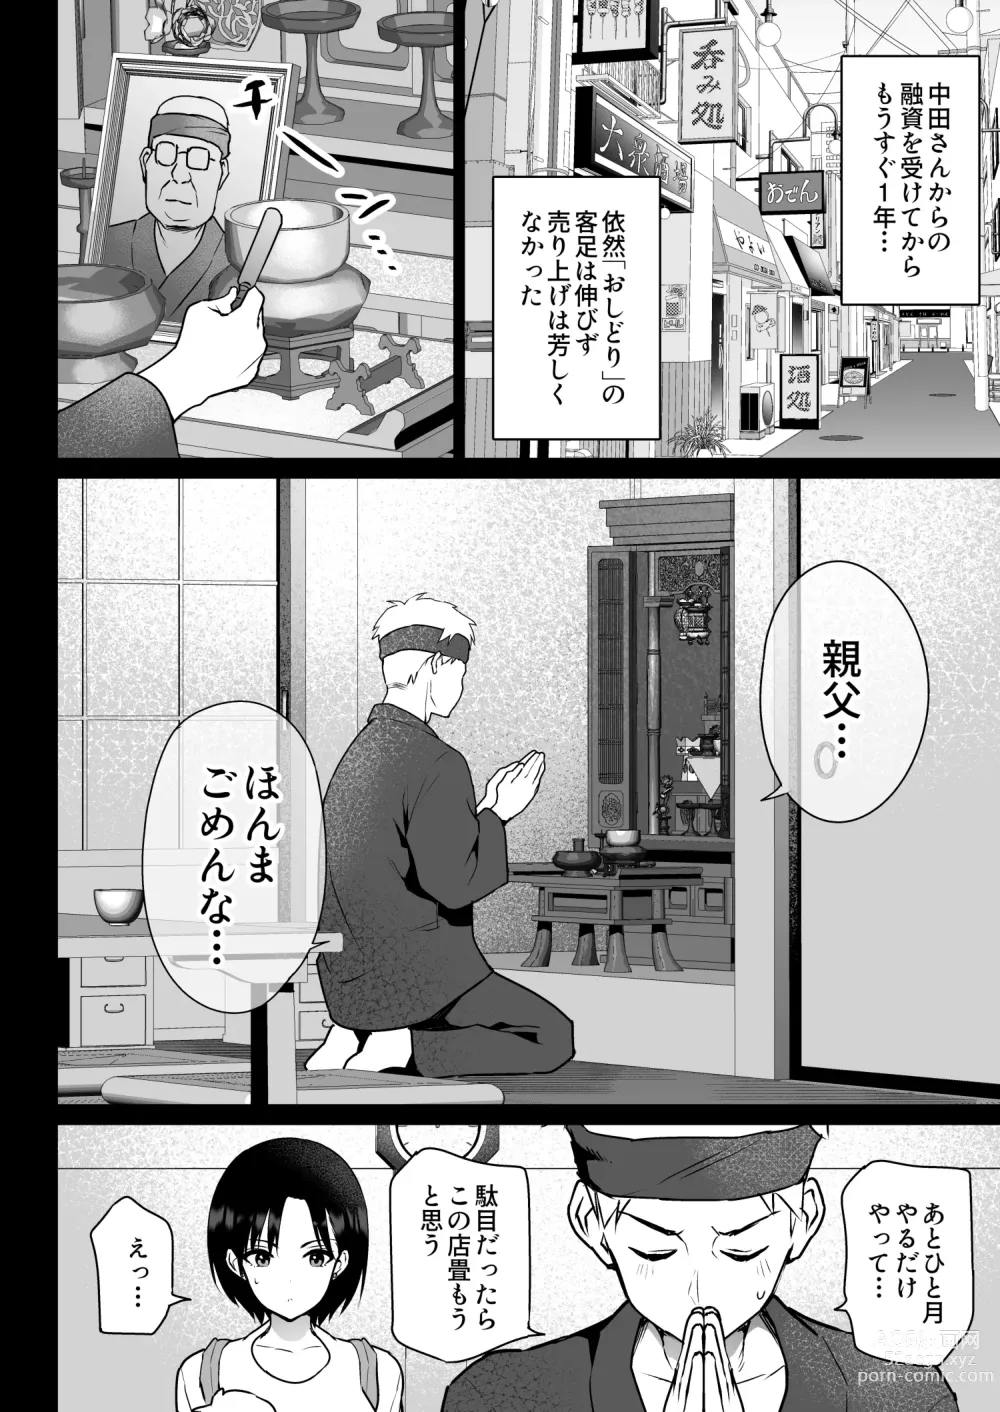 Page 13 of doujinshi Oshidori Fuufu Yakitorare